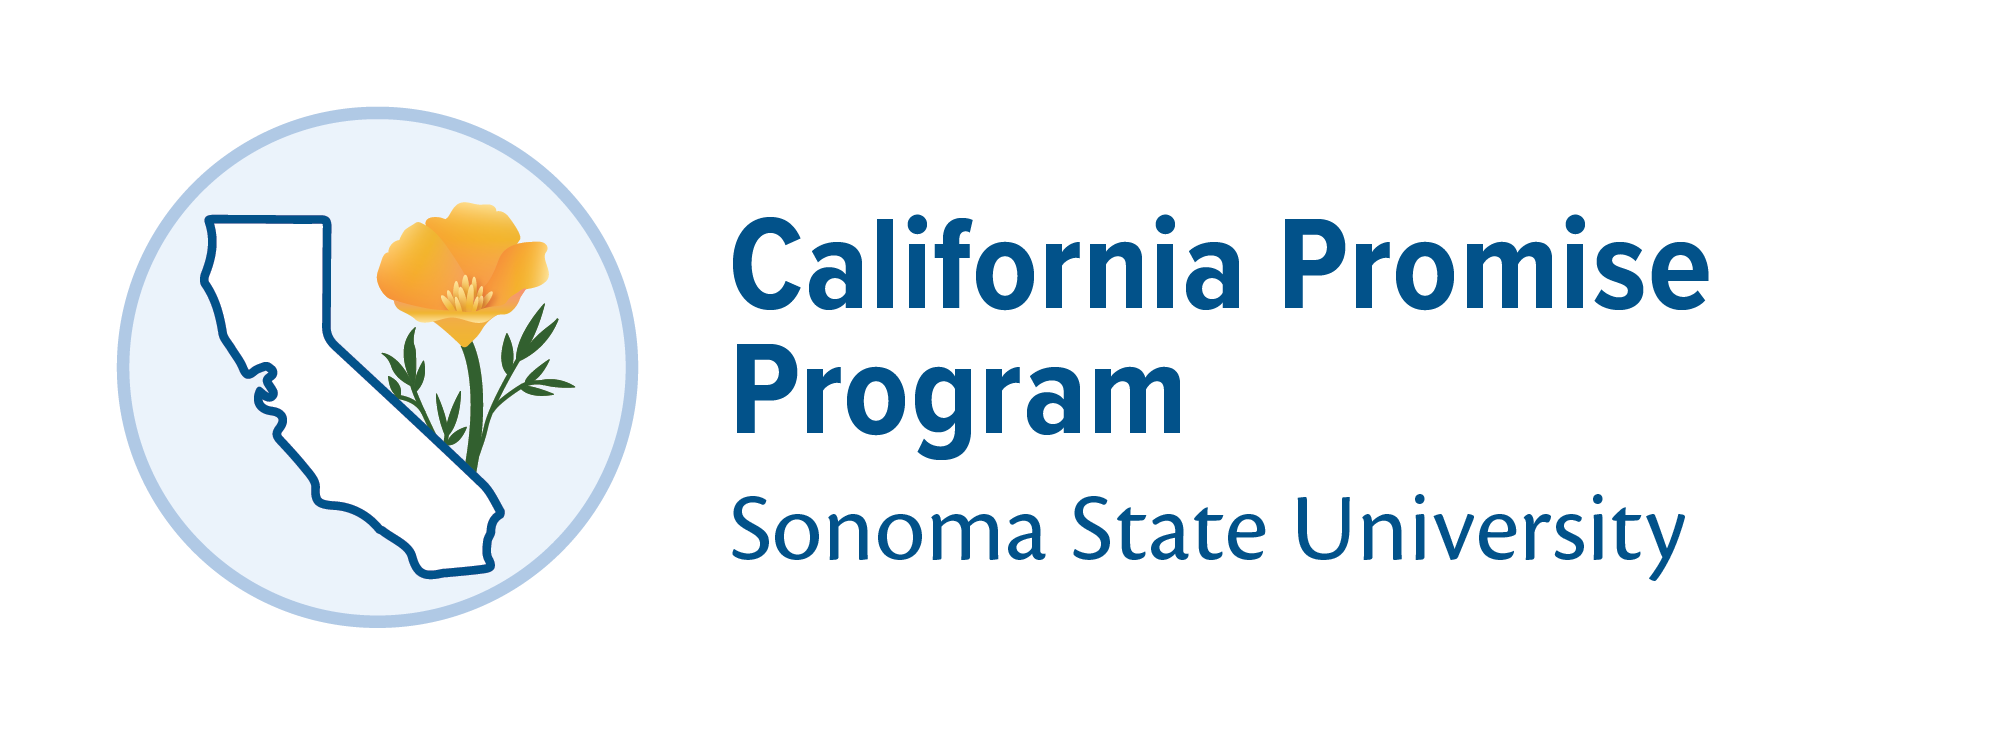 California Promise Program